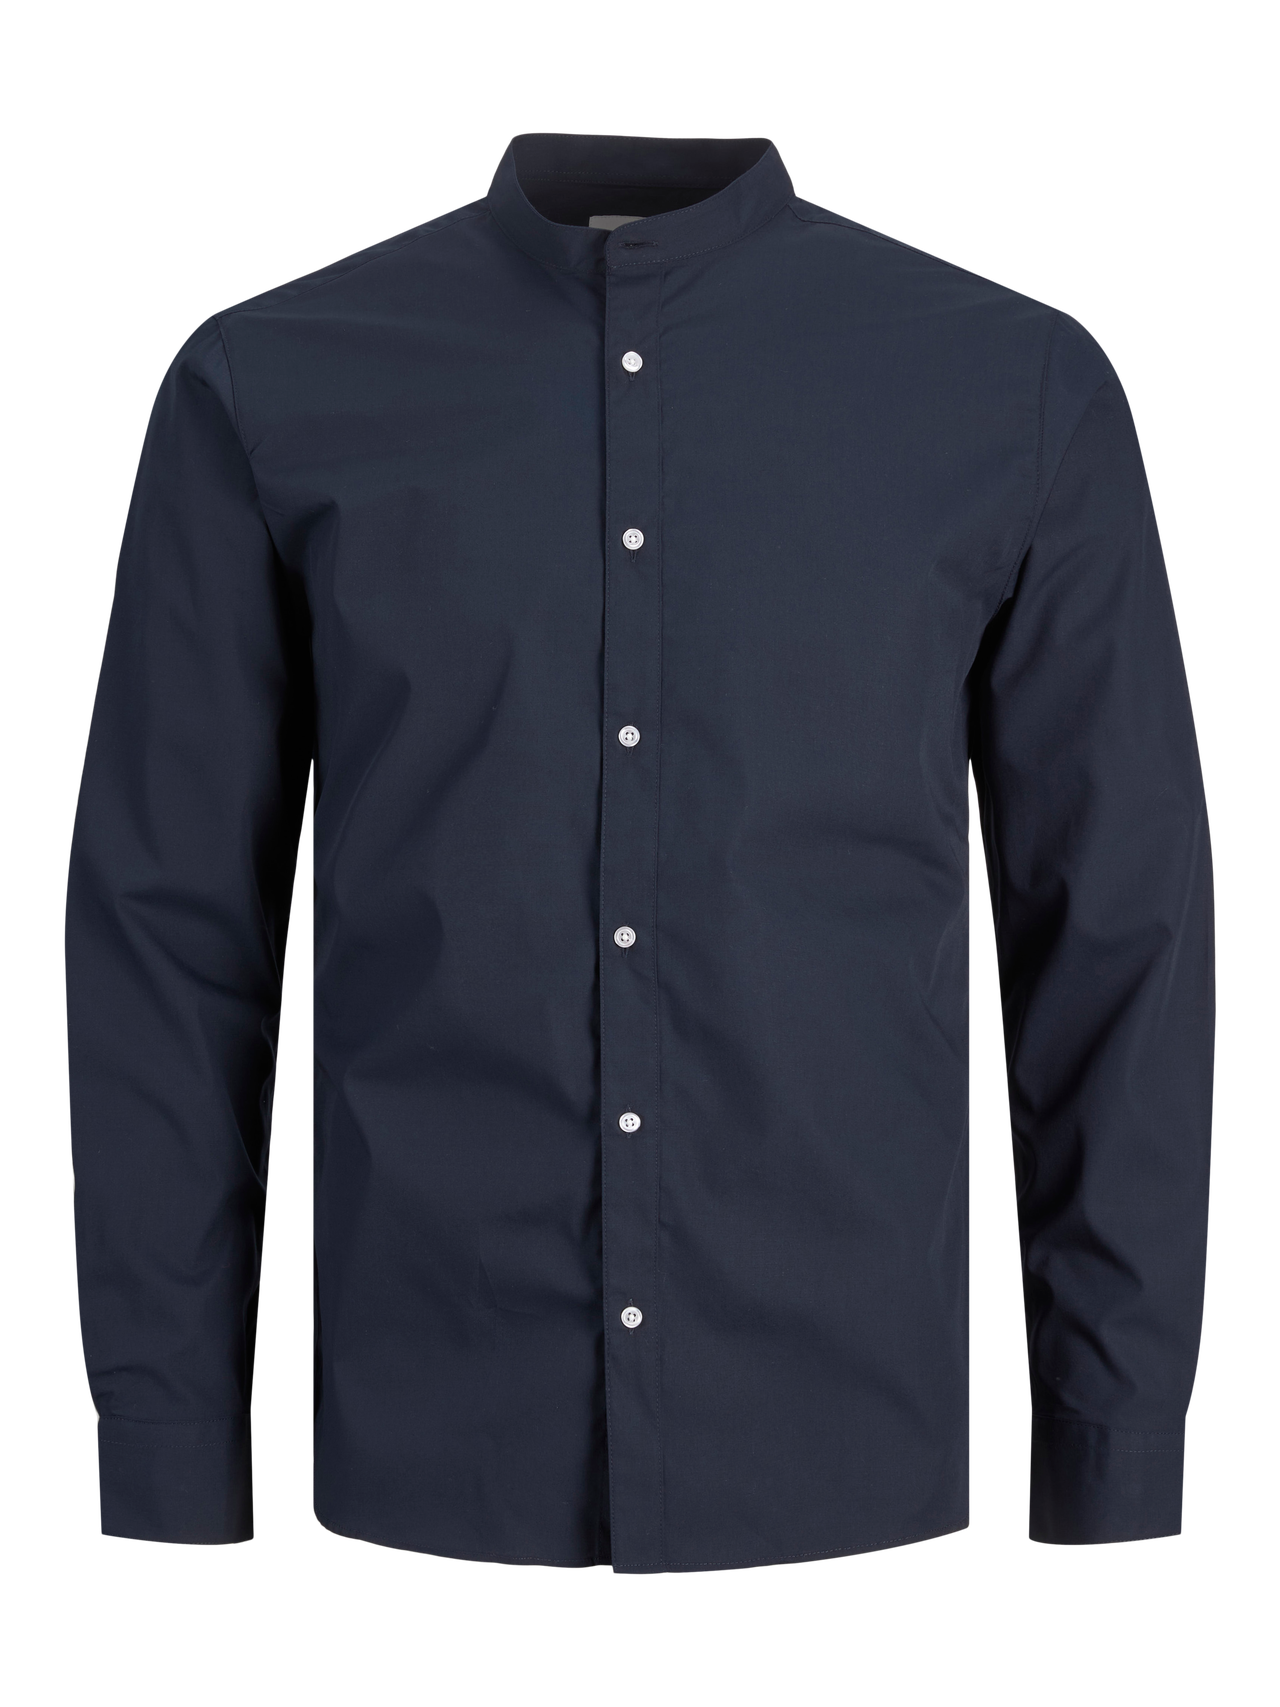 Jack & Jones Slim Fit Casual shirt -Navy Blazer - 12205921